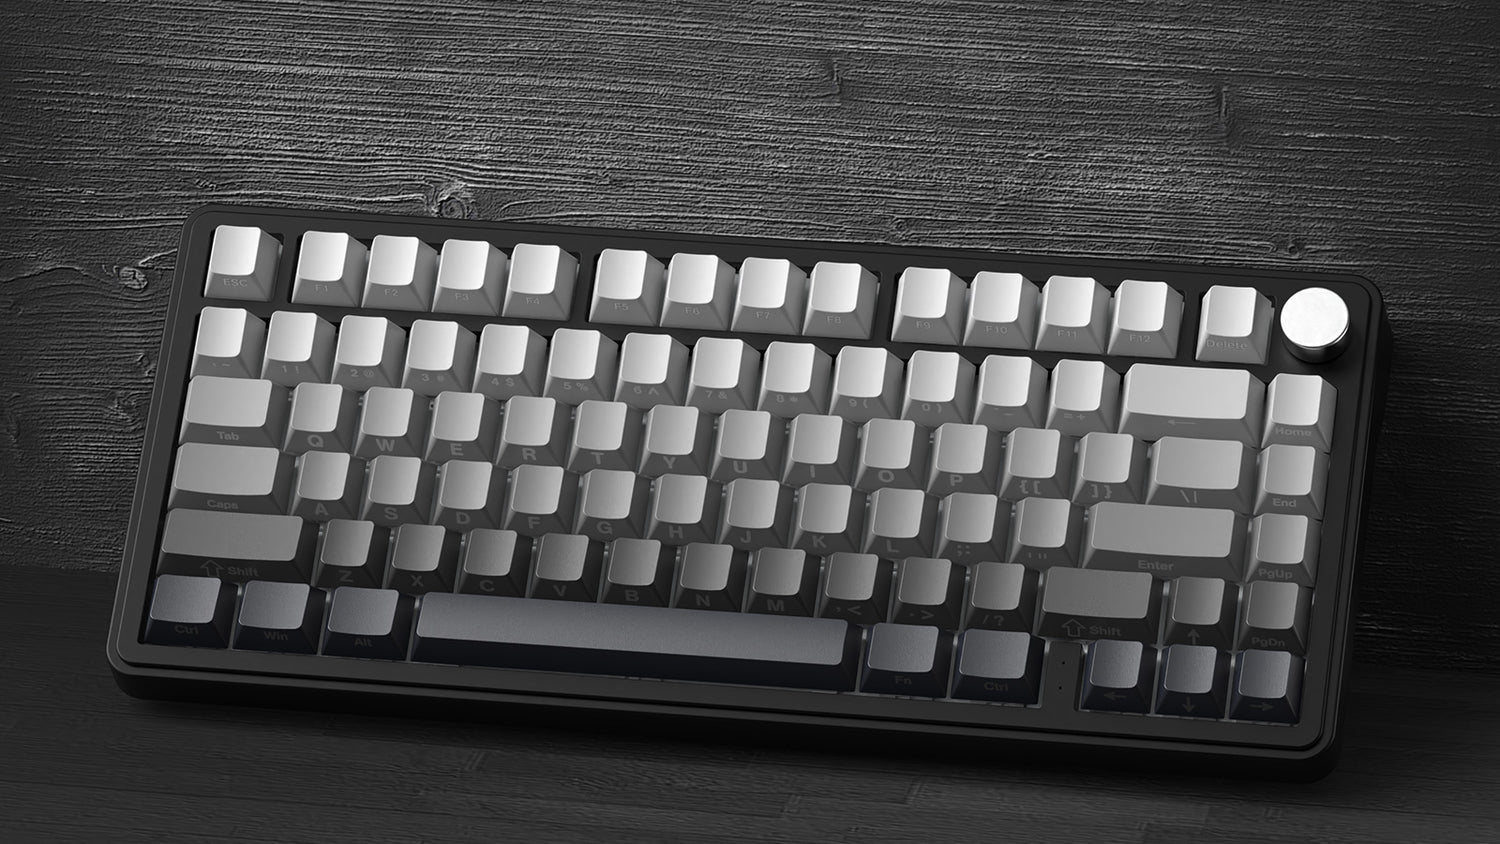 White keycaps, black keyboard